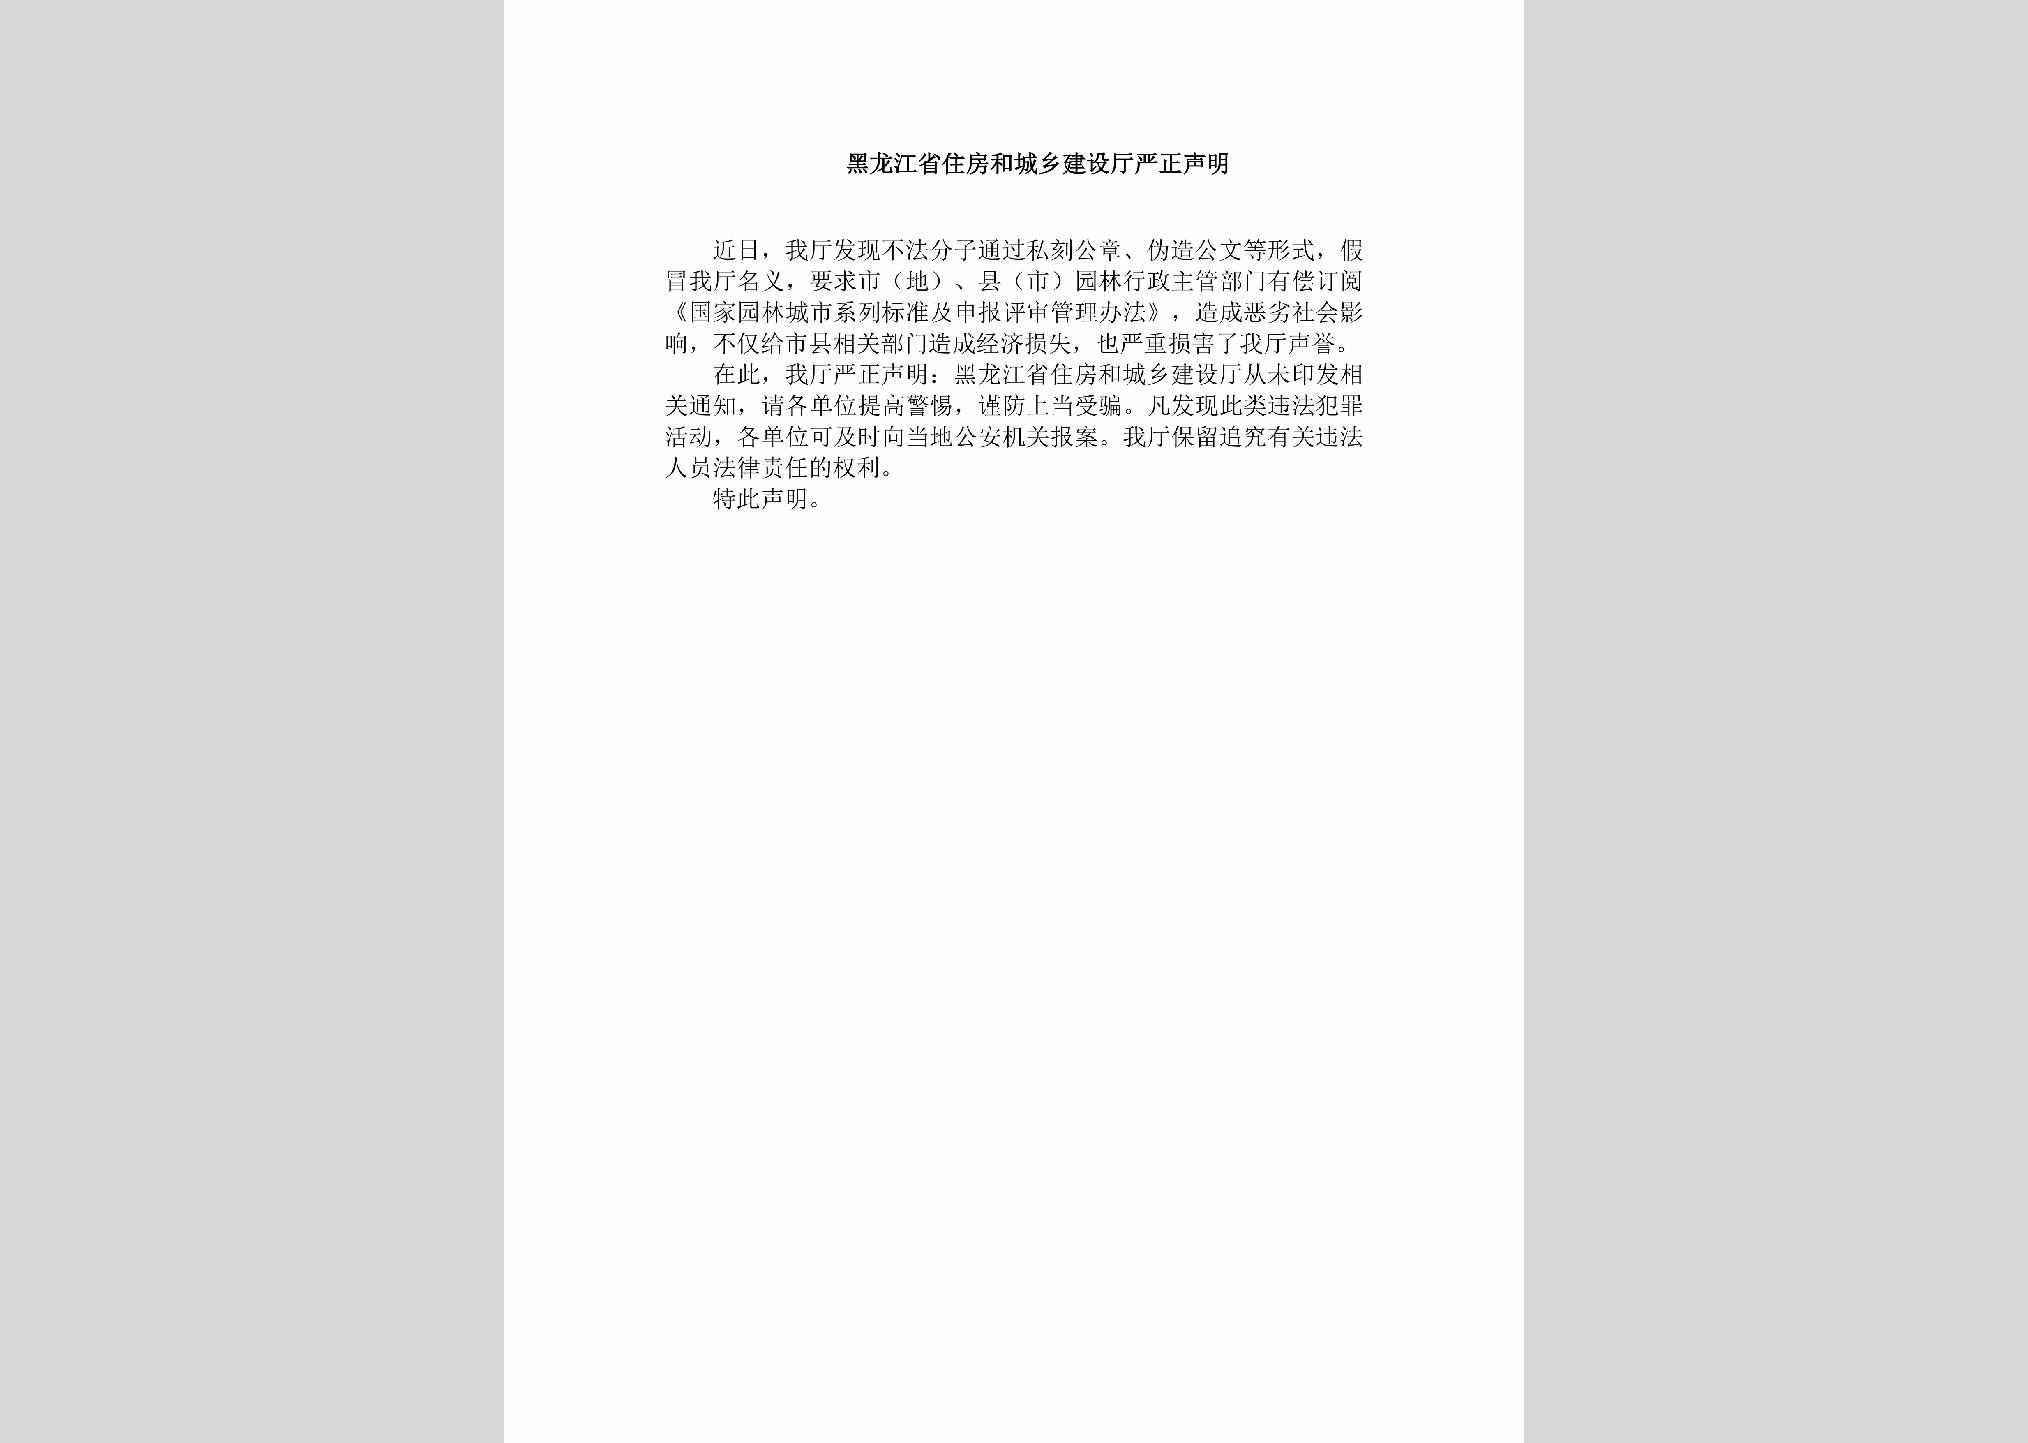 HLJ-HLJSYZSM-2019：黑龙江省住房和城乡建设厅严正声明